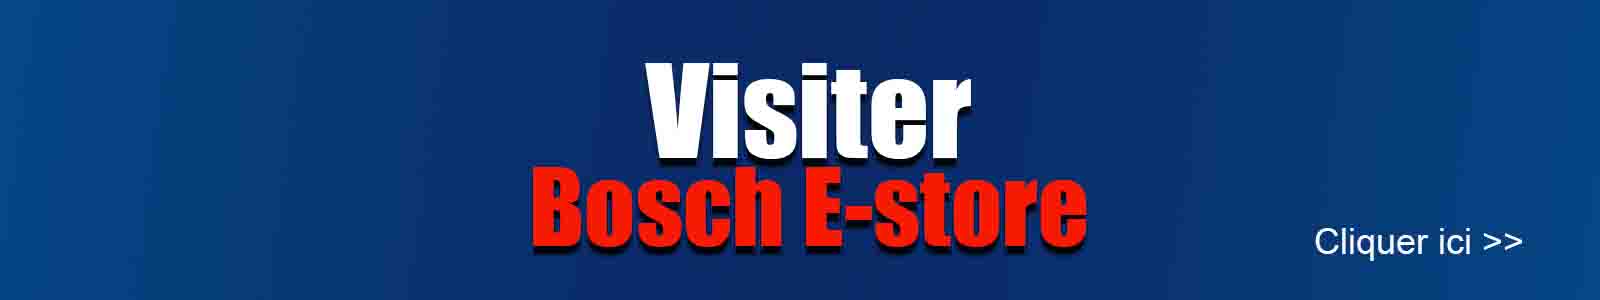 Visiter le e-store Bosch